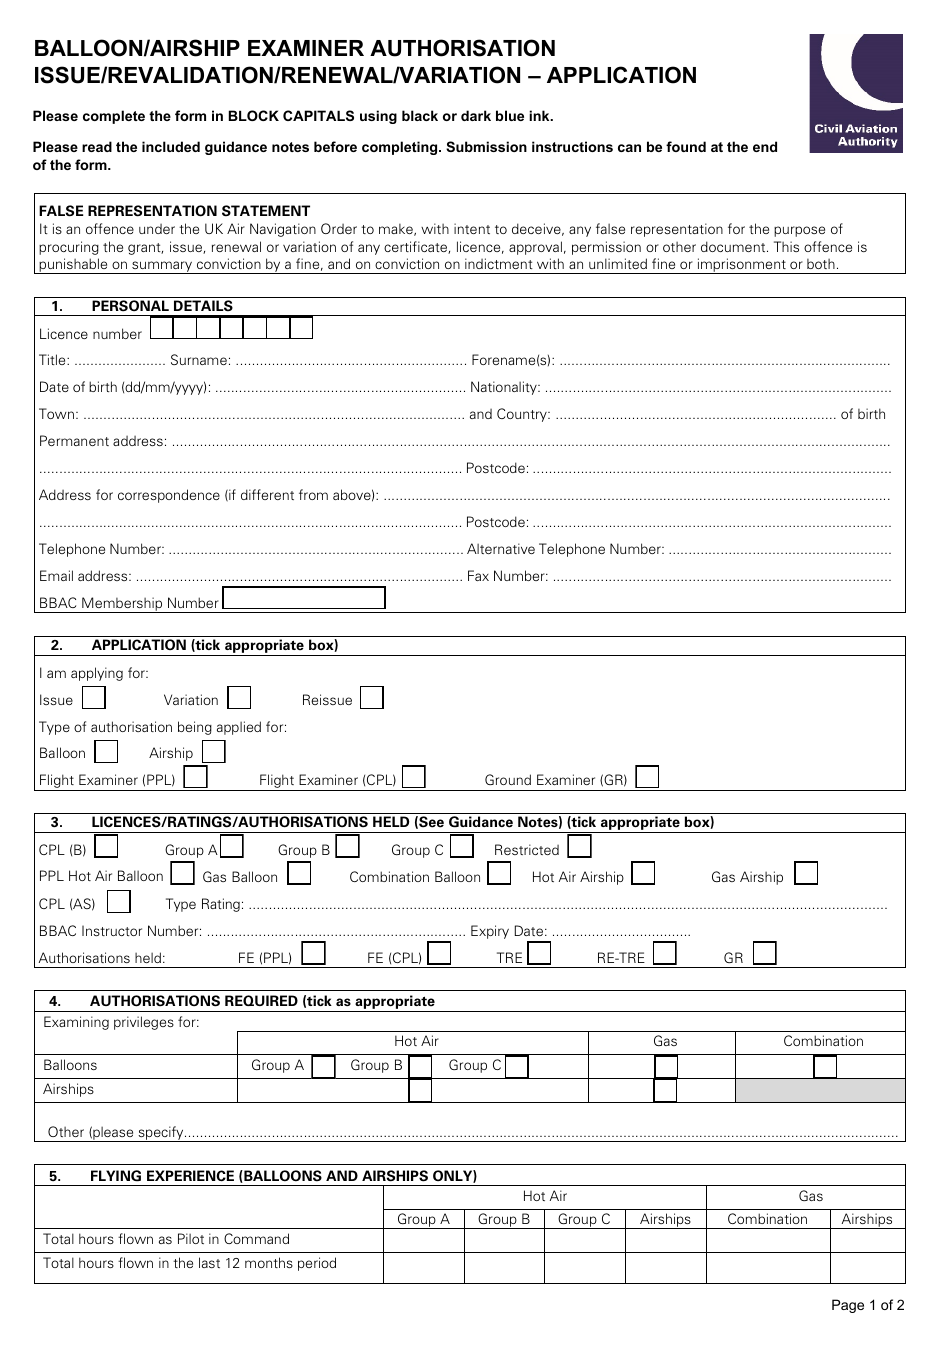 Form SRG1182 Balloon / Airship Examiner Authorisation Issue / Revalidation / Renewal / Variation - Application - United Kingdom, Page 1